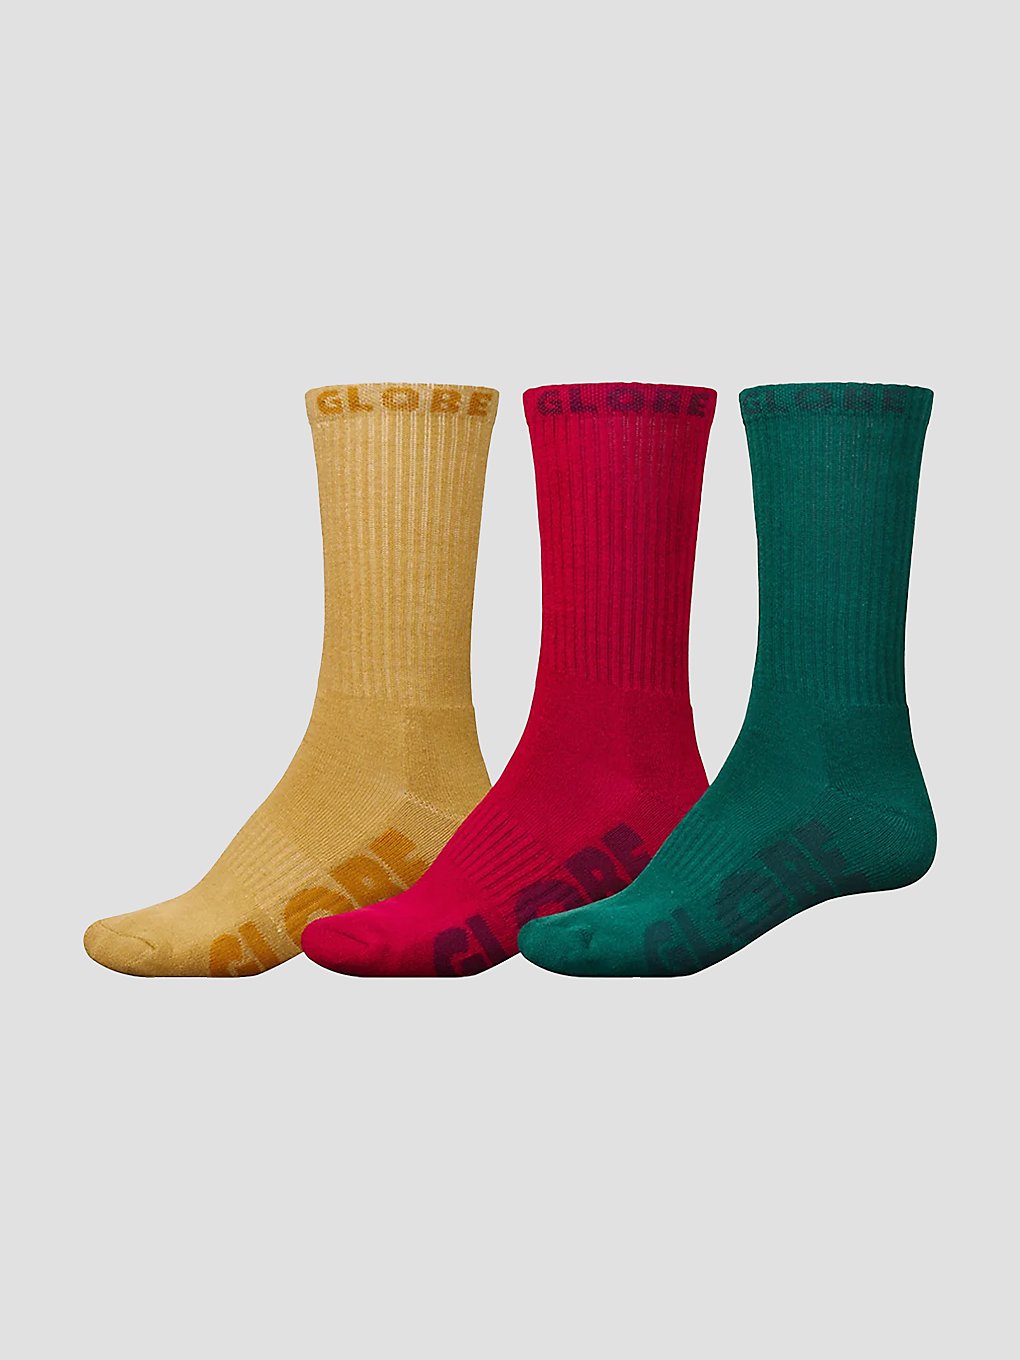 Globe Sustain Crew 3 Pack (7-11) Socken assorted kaufen